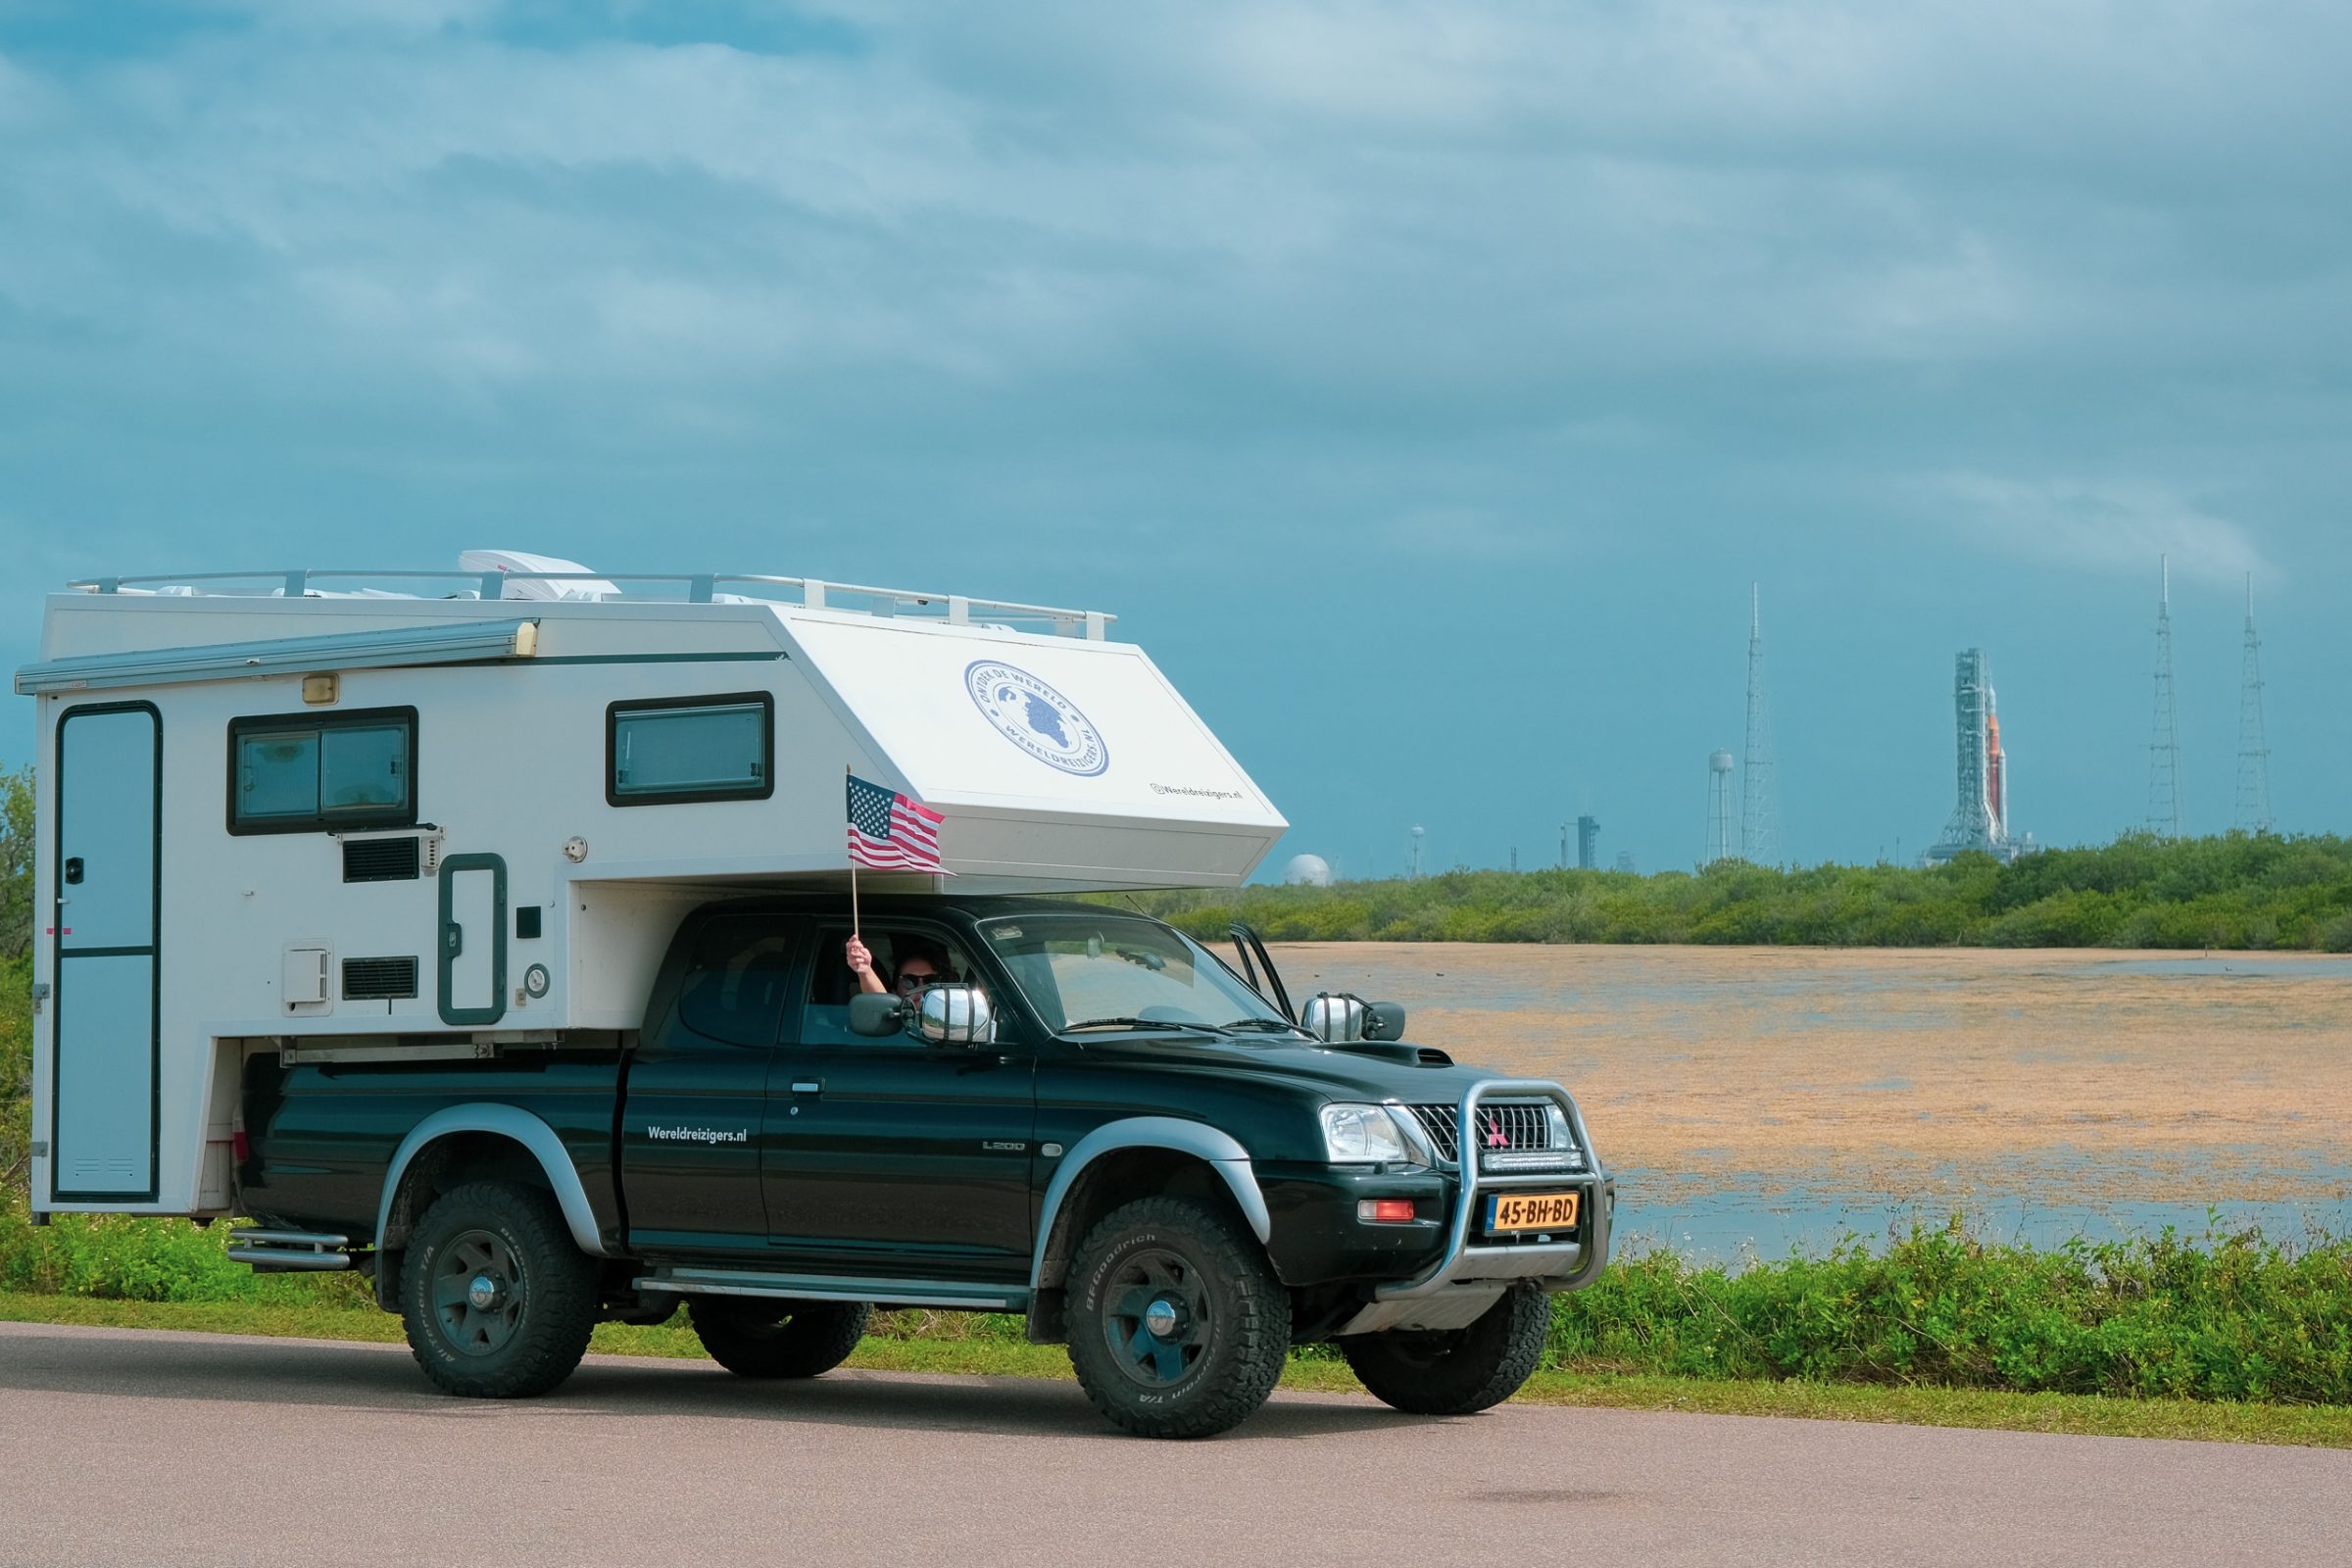 De Wereldreizigers.nl 4x4 camper, de Amerikaanse vlag en de nieuwe SLS ruimteraket | Cape Canaveral